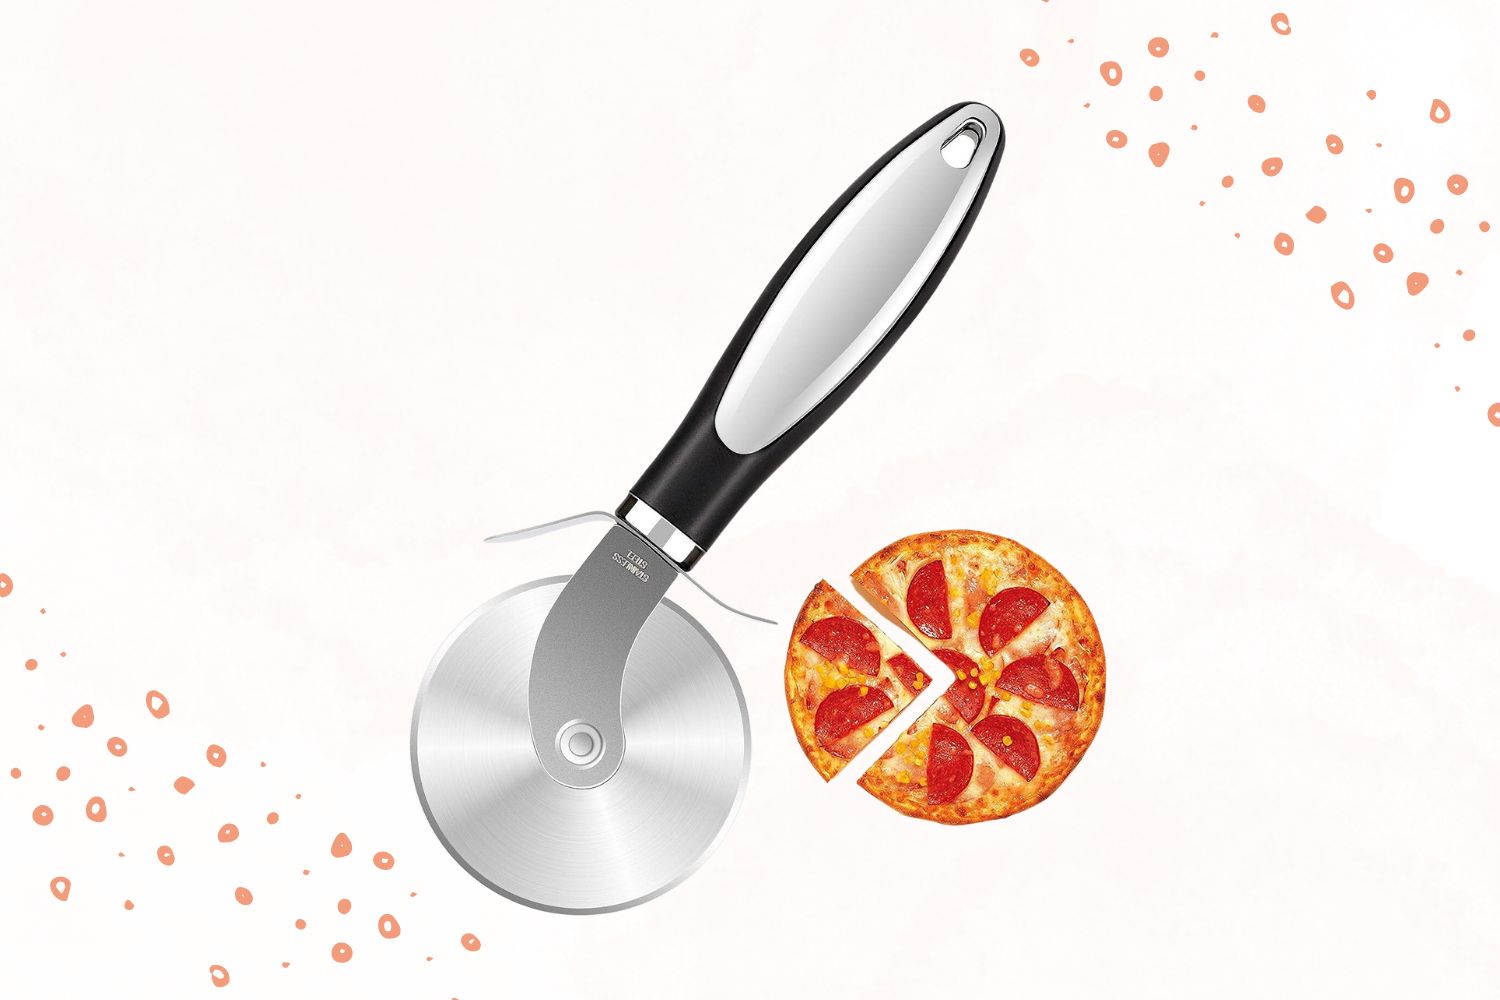 Vcspenkr Premium Kitchen Pizza Cutter